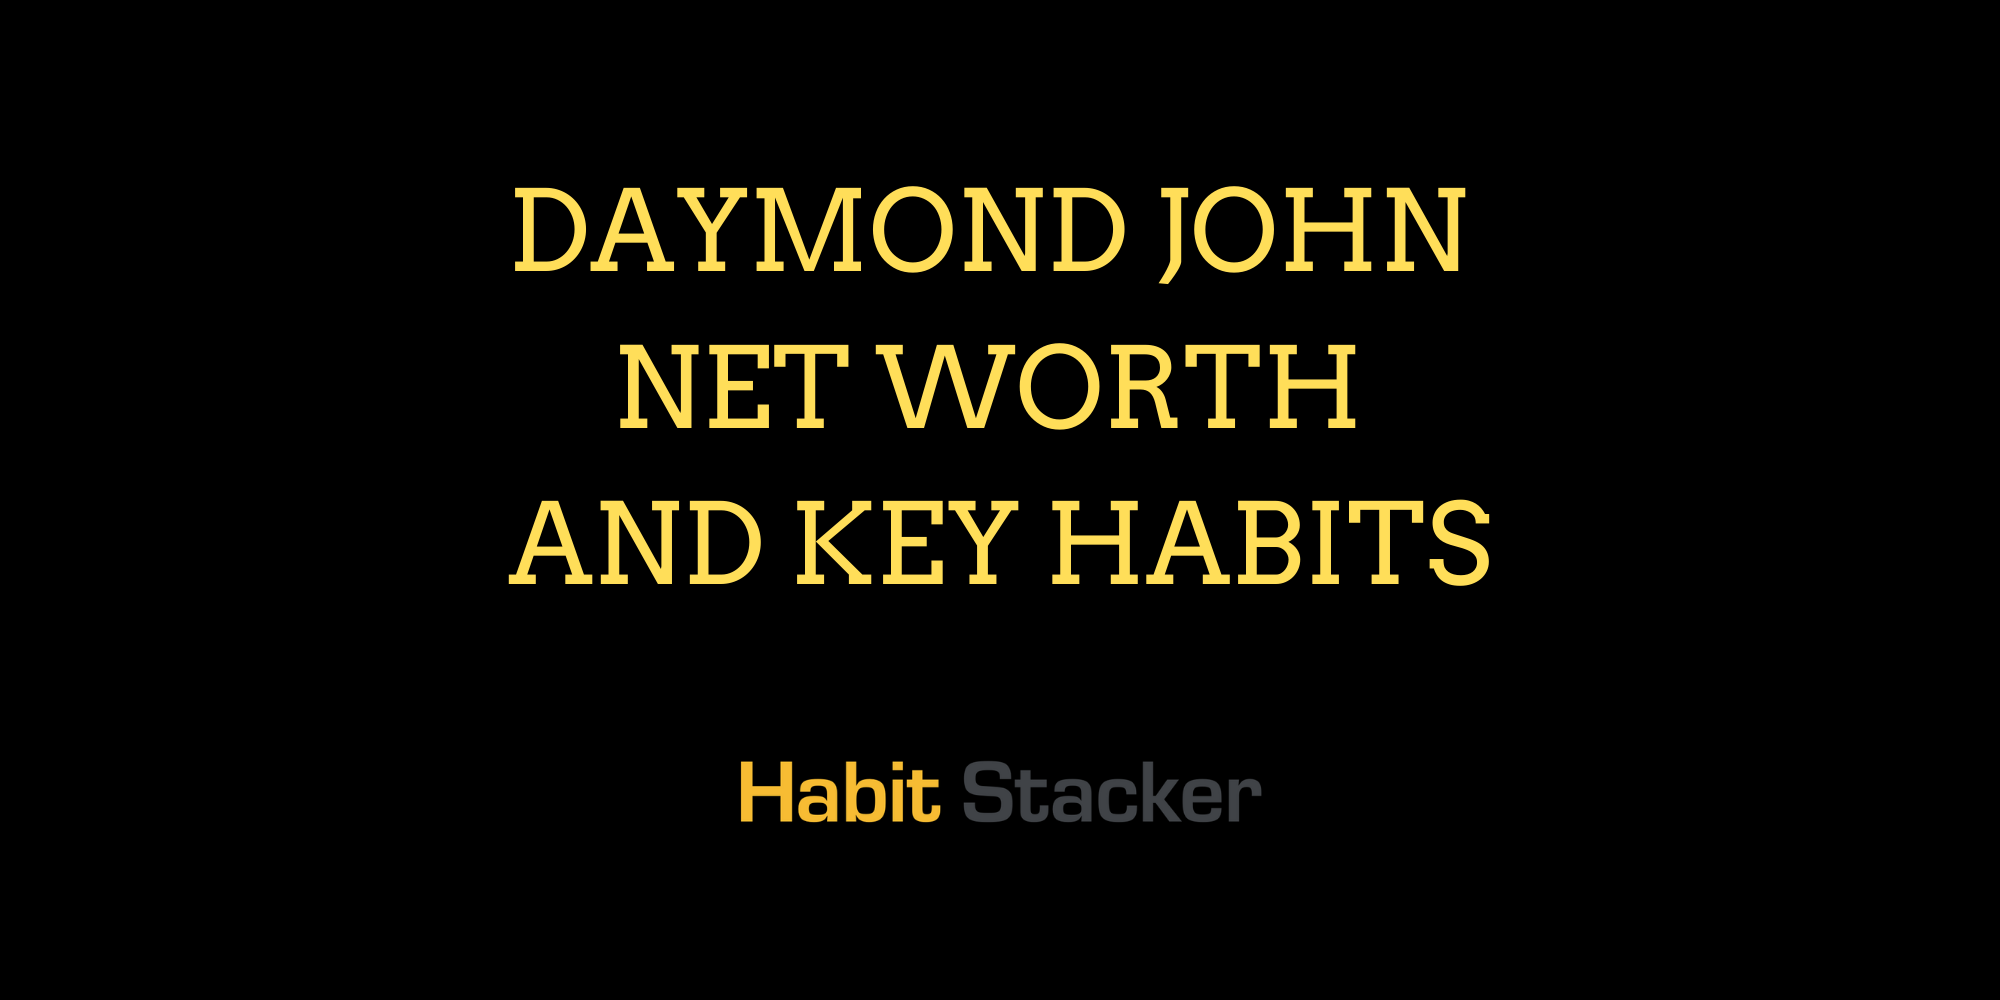 Daymond John Net Worth and Key Habits